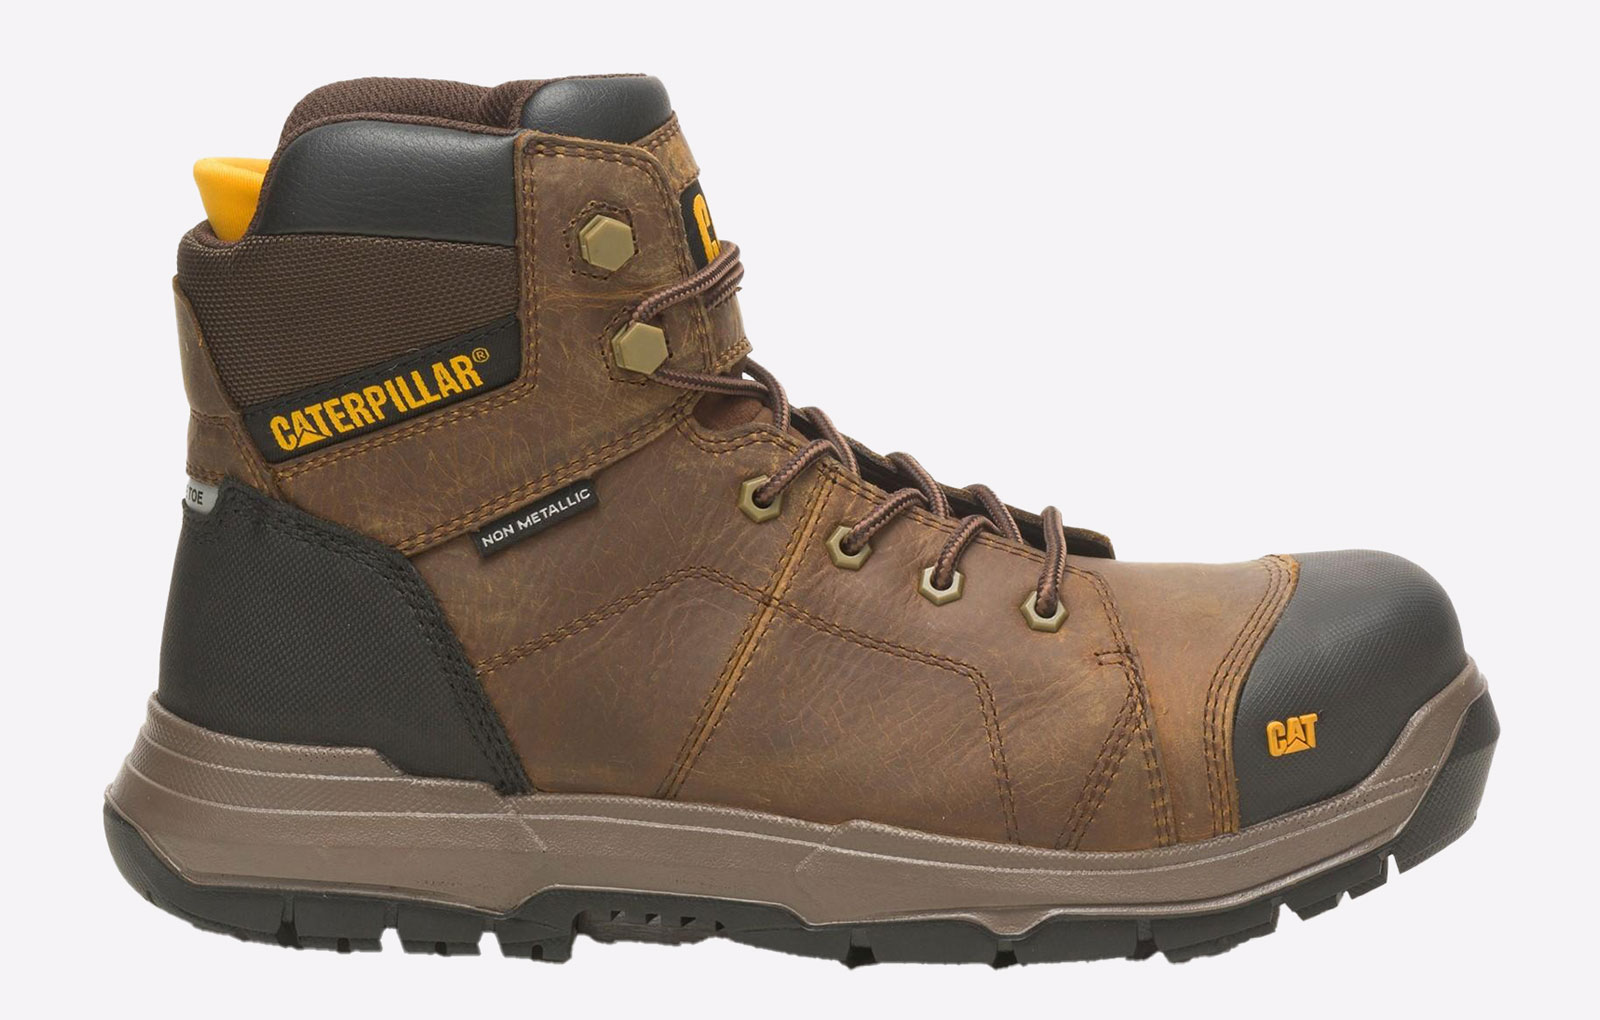 Caterpillar Crossrail 2.0 WATERPROOF Safety Boots Mens - GRD-38452-71658-11